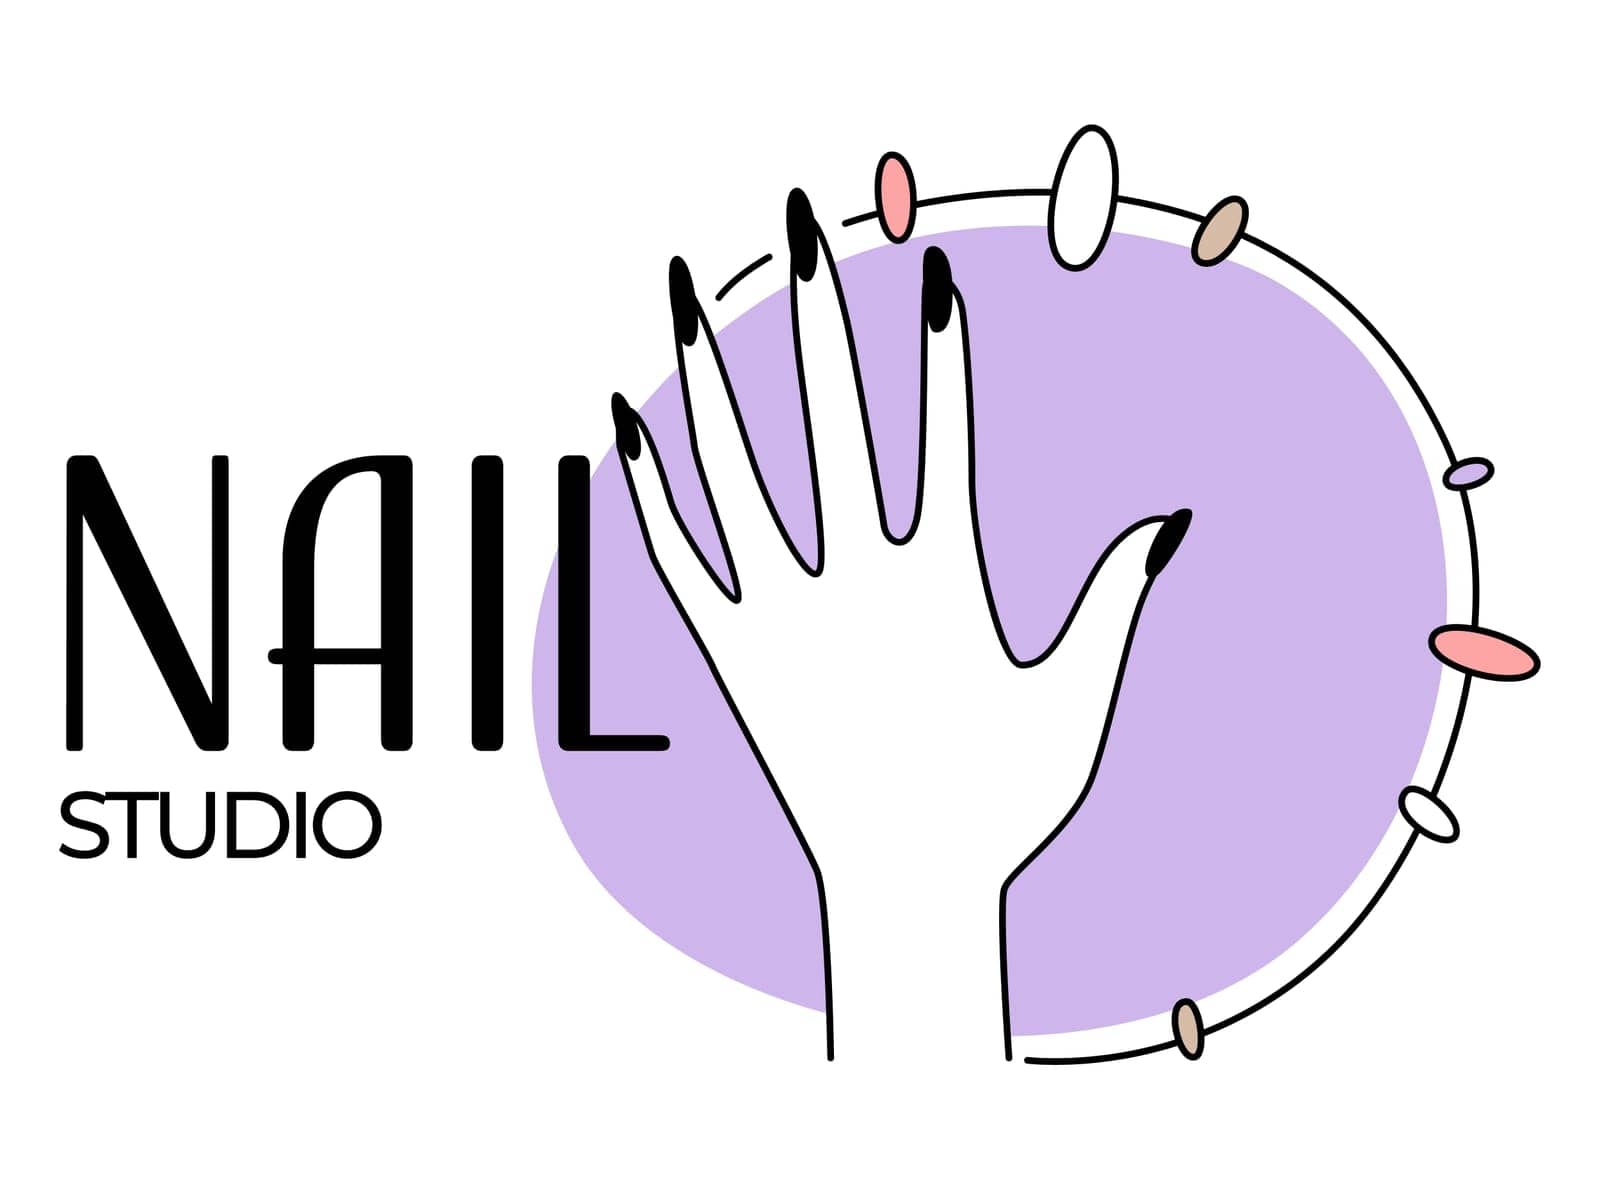 Nail studio or salon for fingernails beauty emblem by Sonulkaster